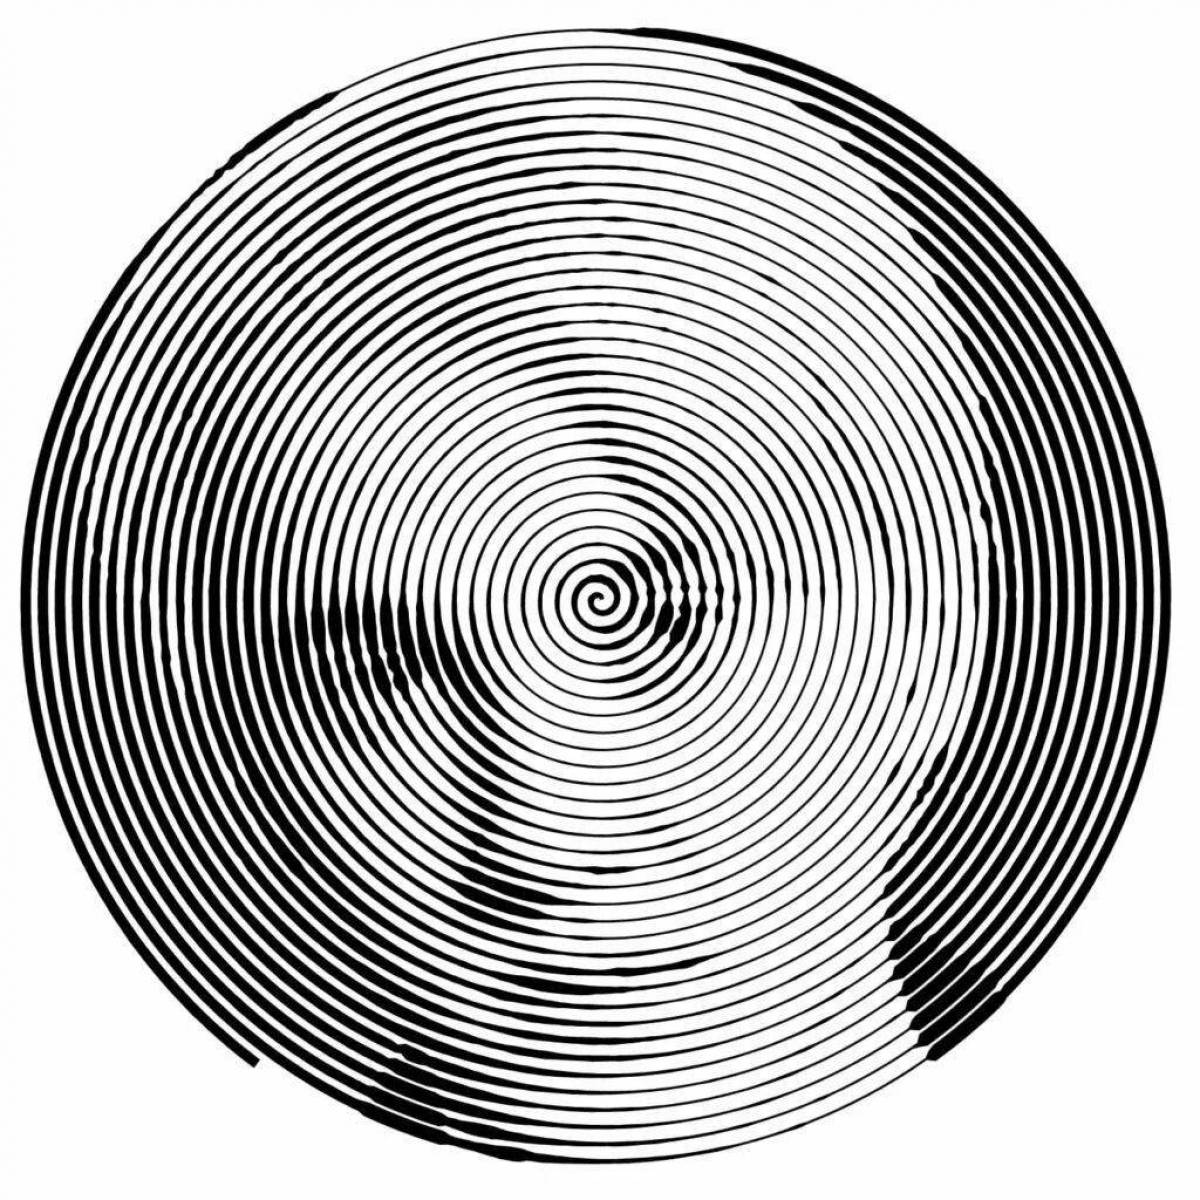 Incredible spiral in coloring circle